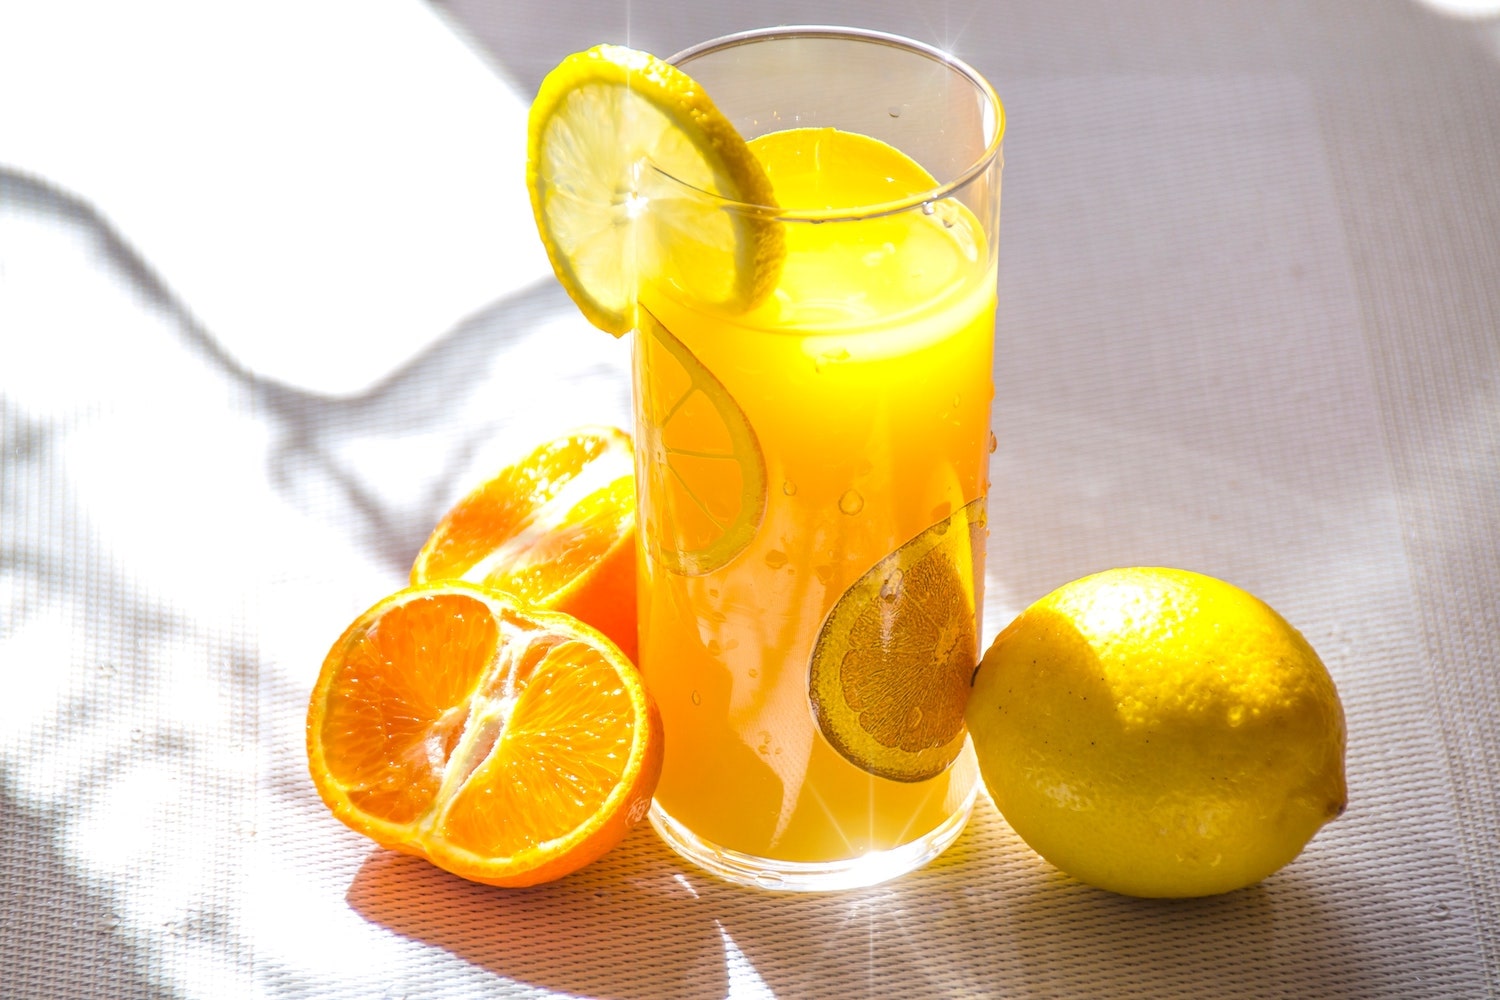 olive oil and lemon juice for sex